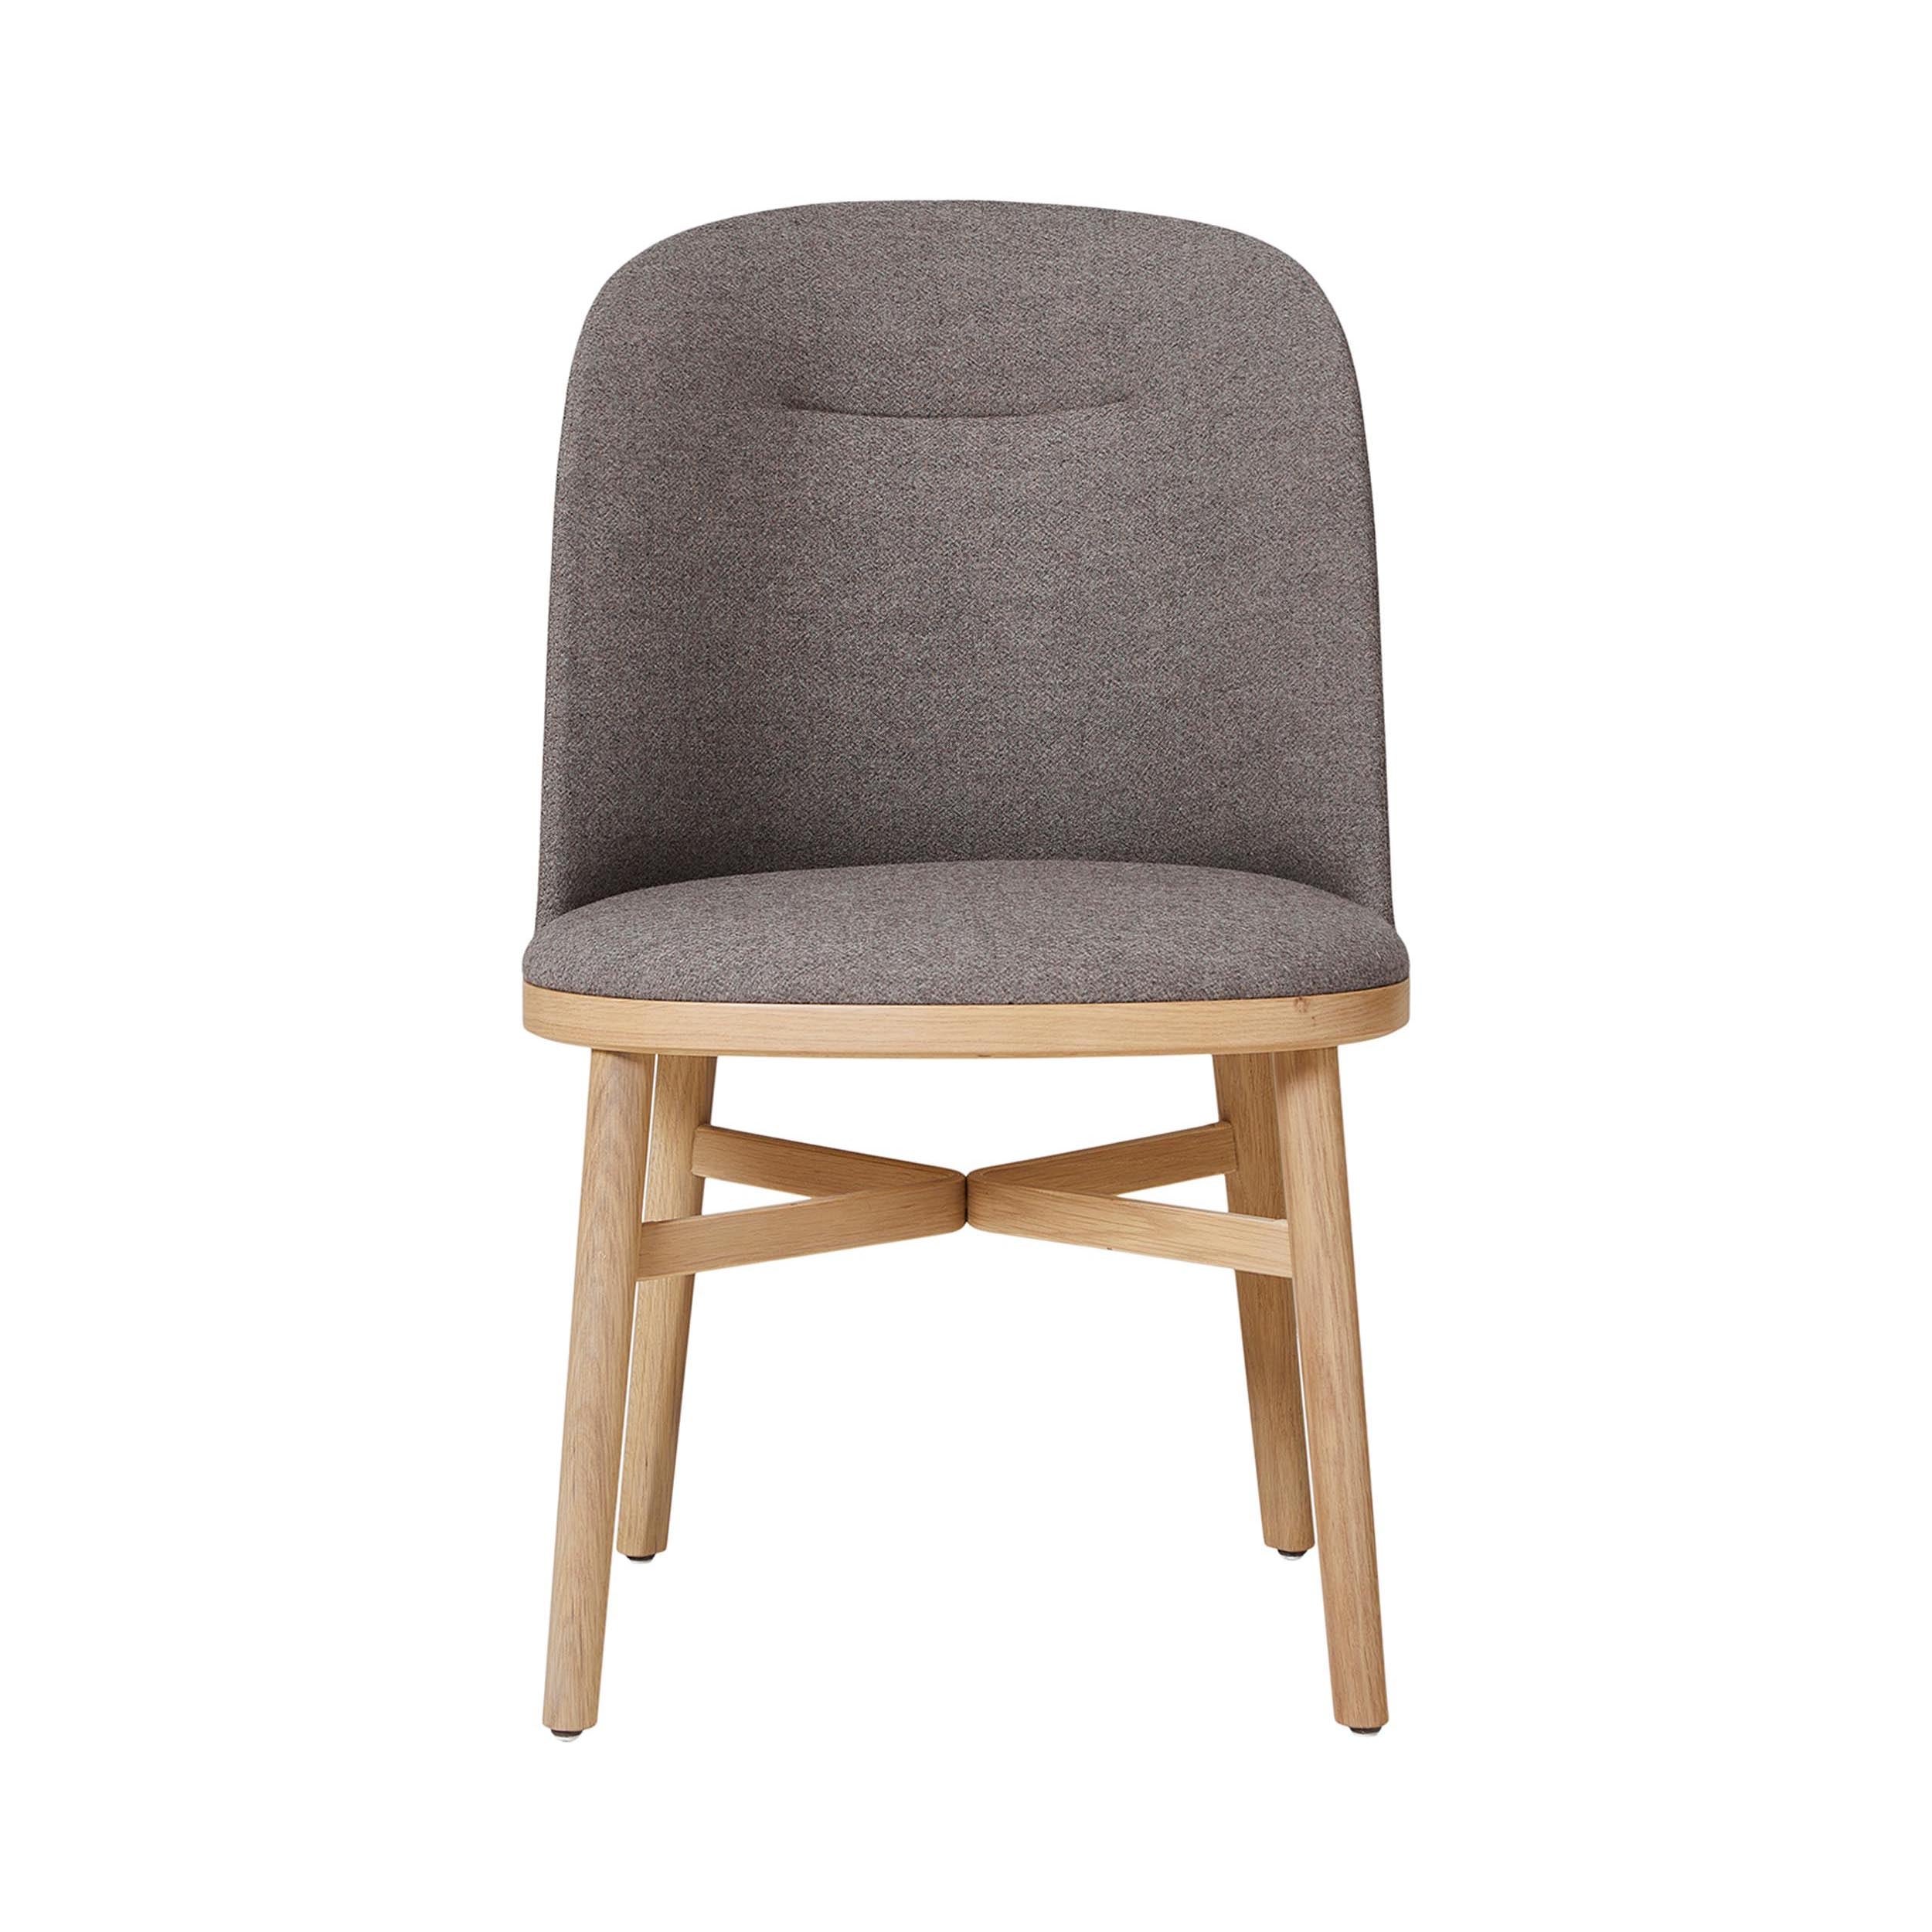 Bund Dining Chair: Natural Oak